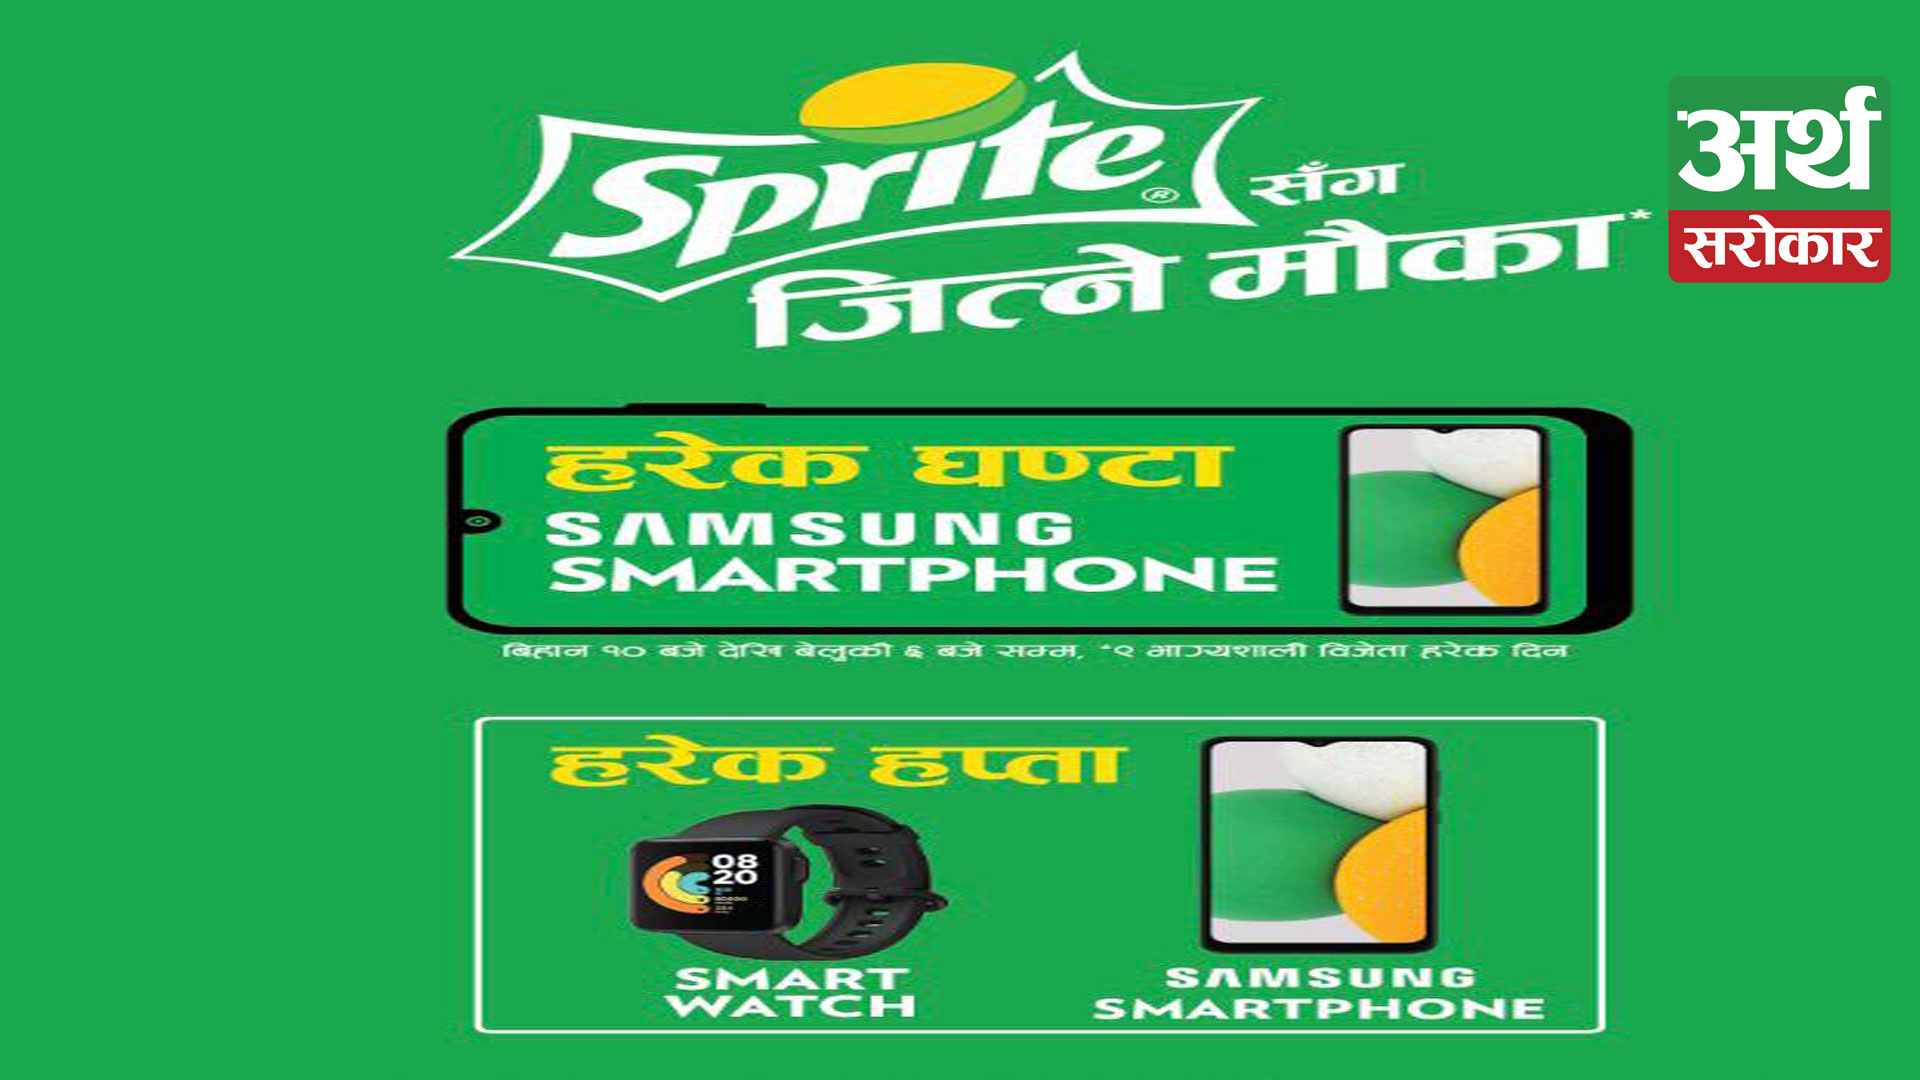 Mega Sprite Promotional Campaign: Sprite Sanga Jitne Mauka